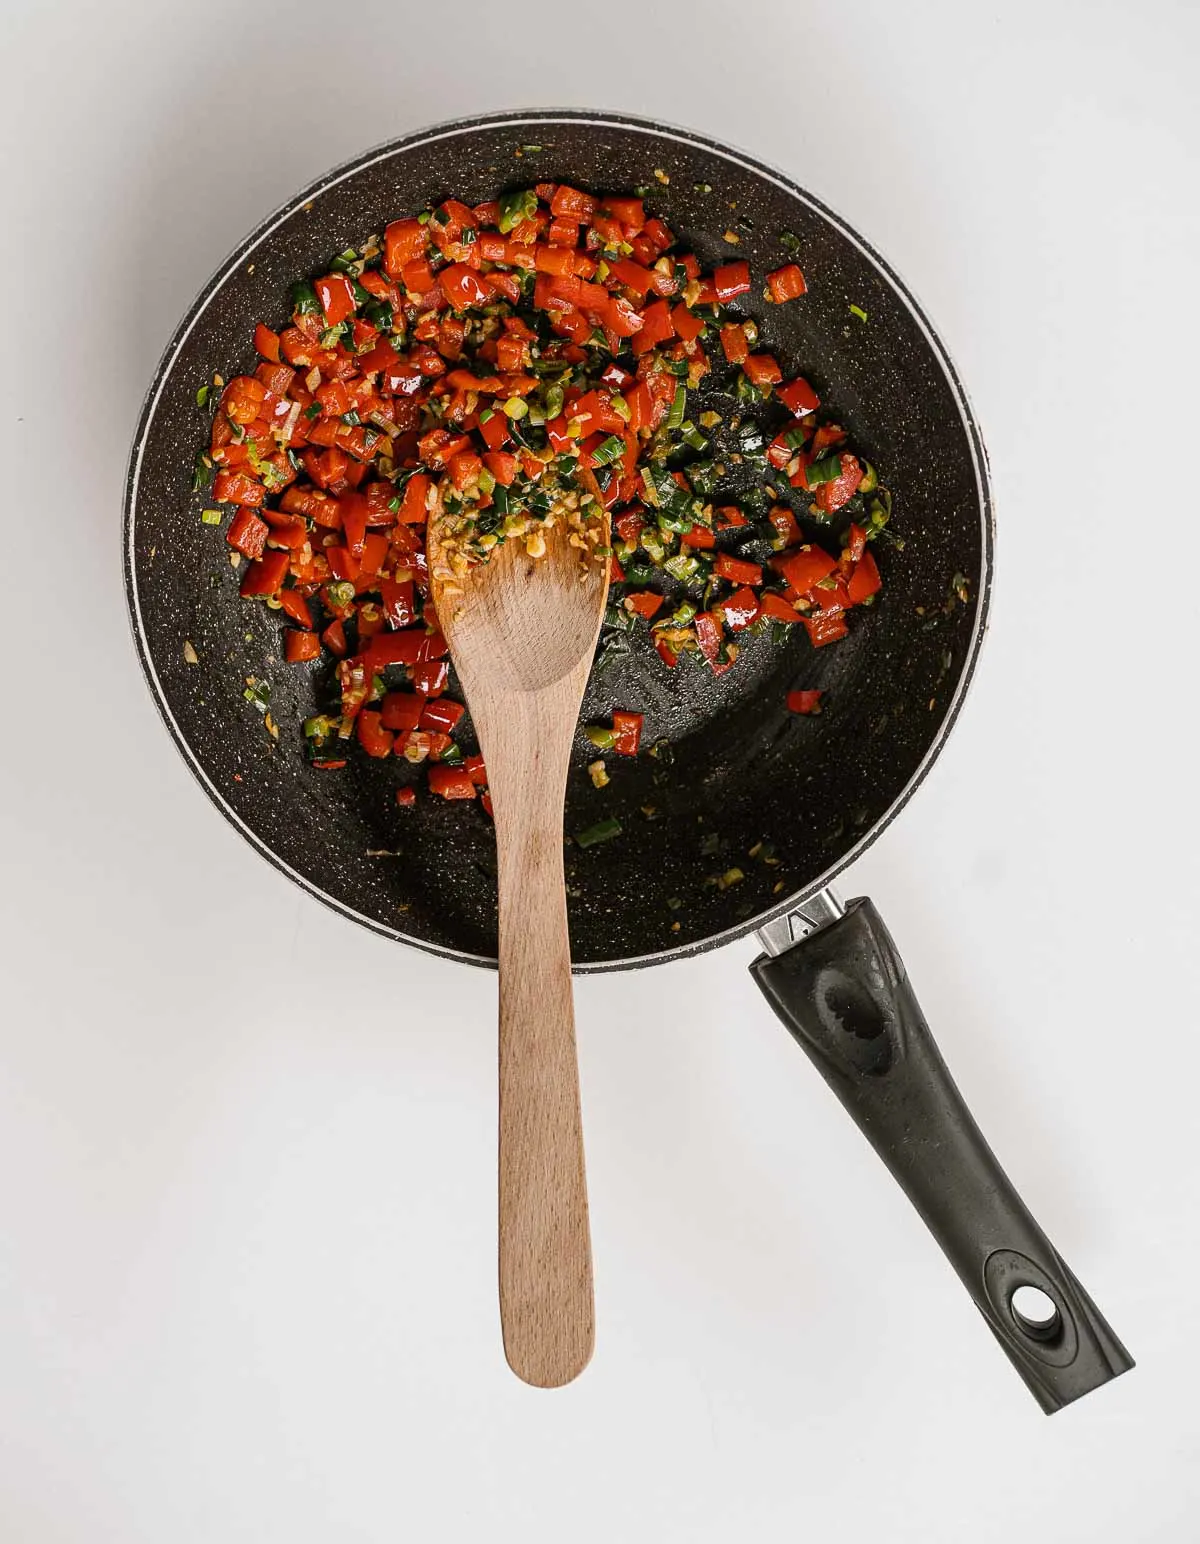 Sauteing veggies in a pan